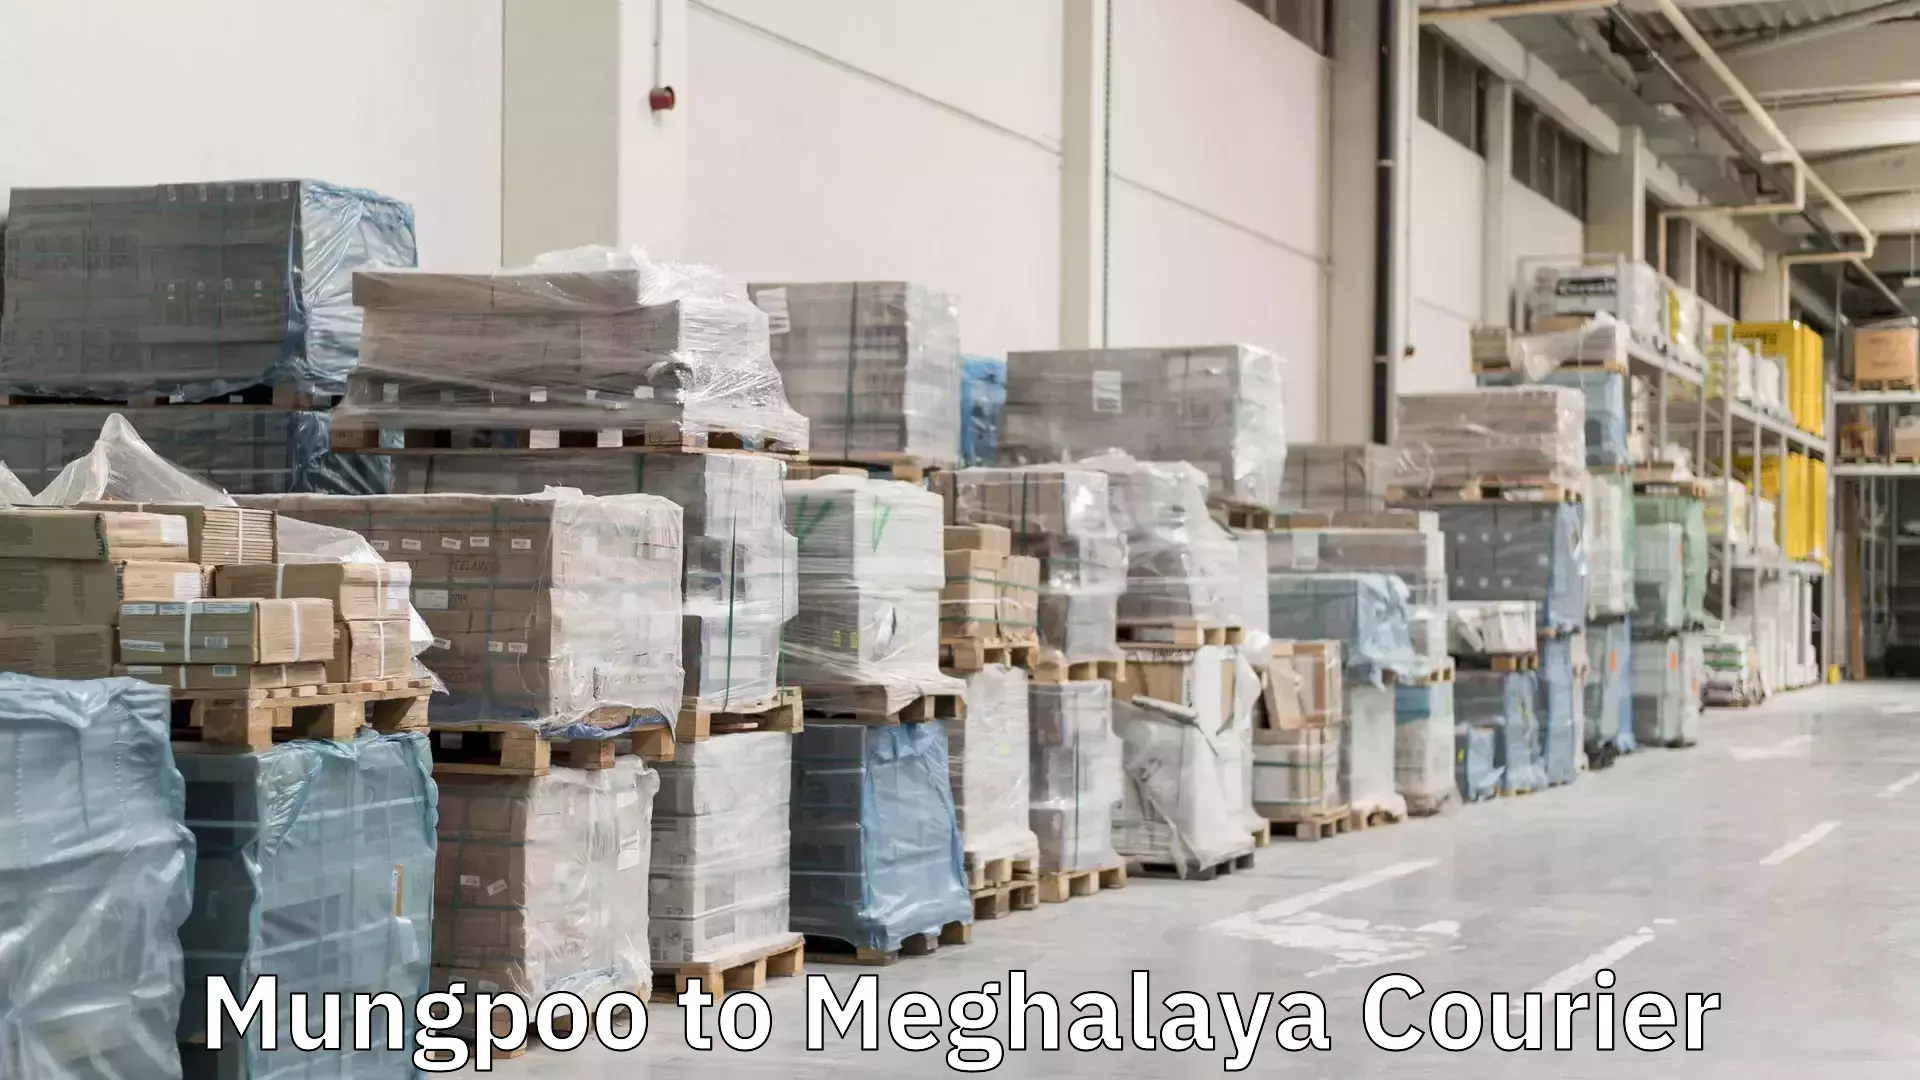 Logistics service provider Mungpoo to Meghalaya